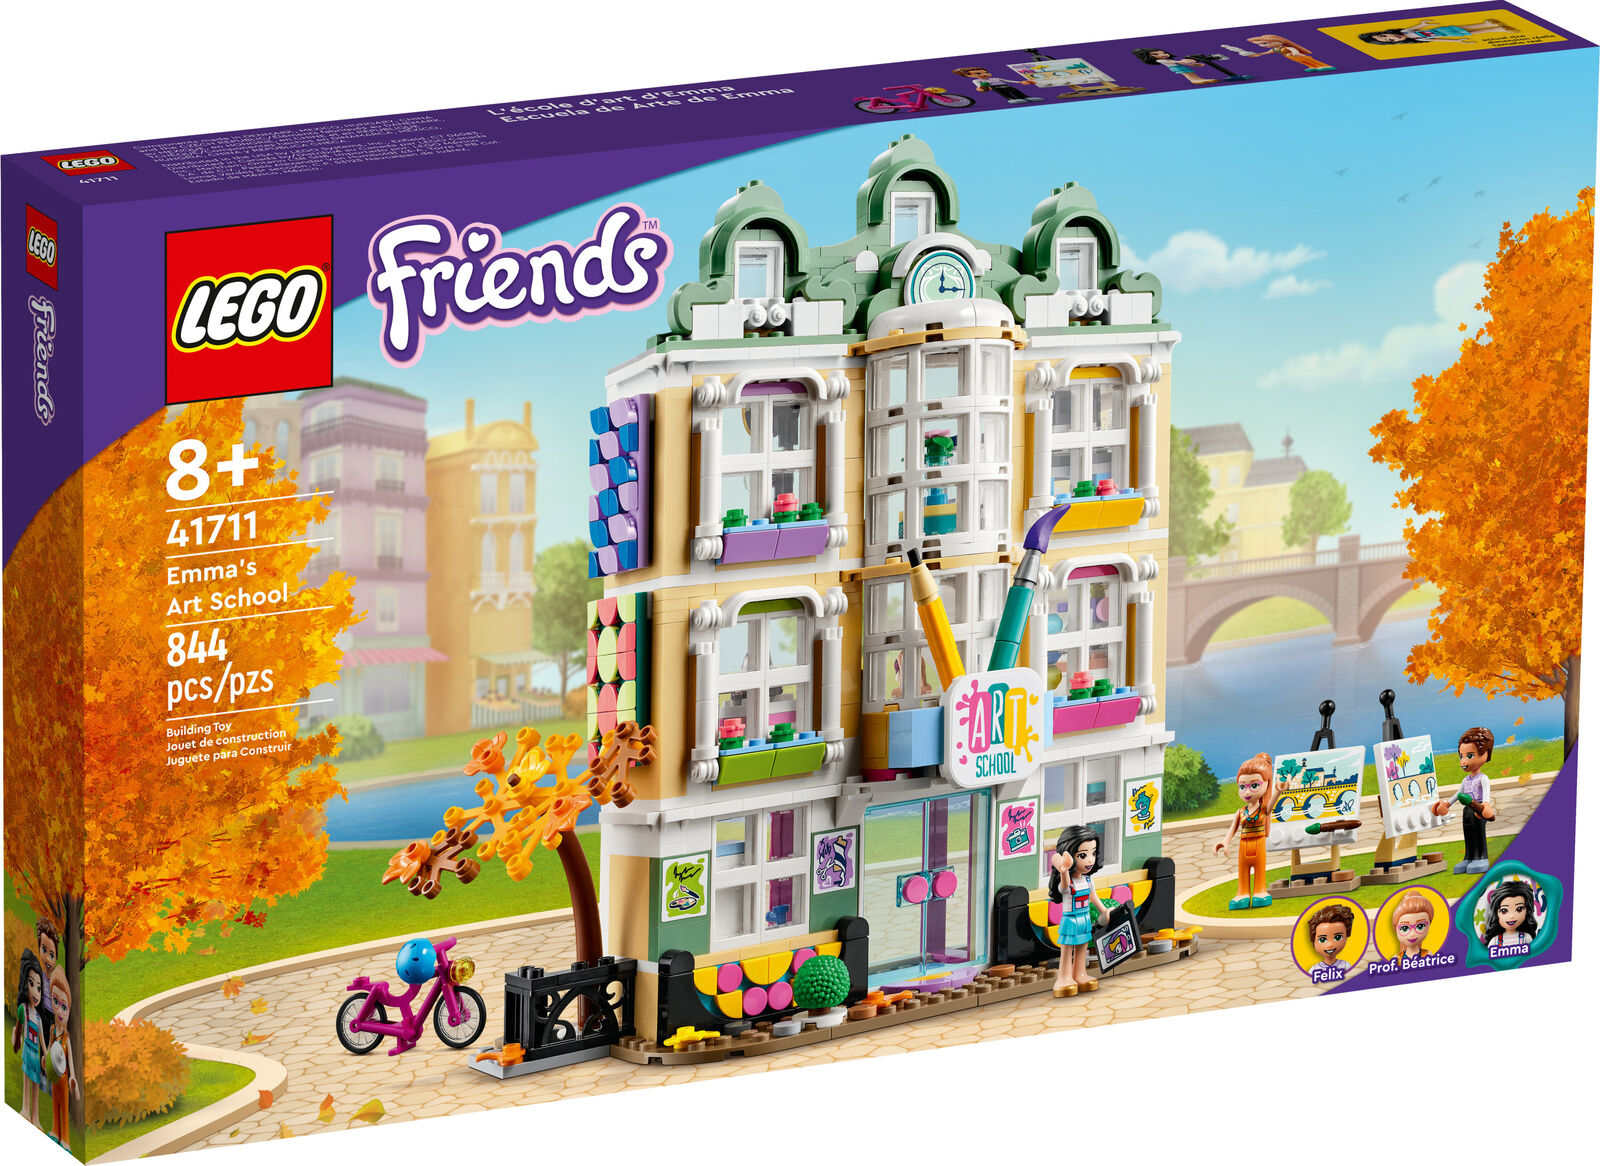 LEGO Friends Emma's Art School House Set 41711 Building Toy New Gift